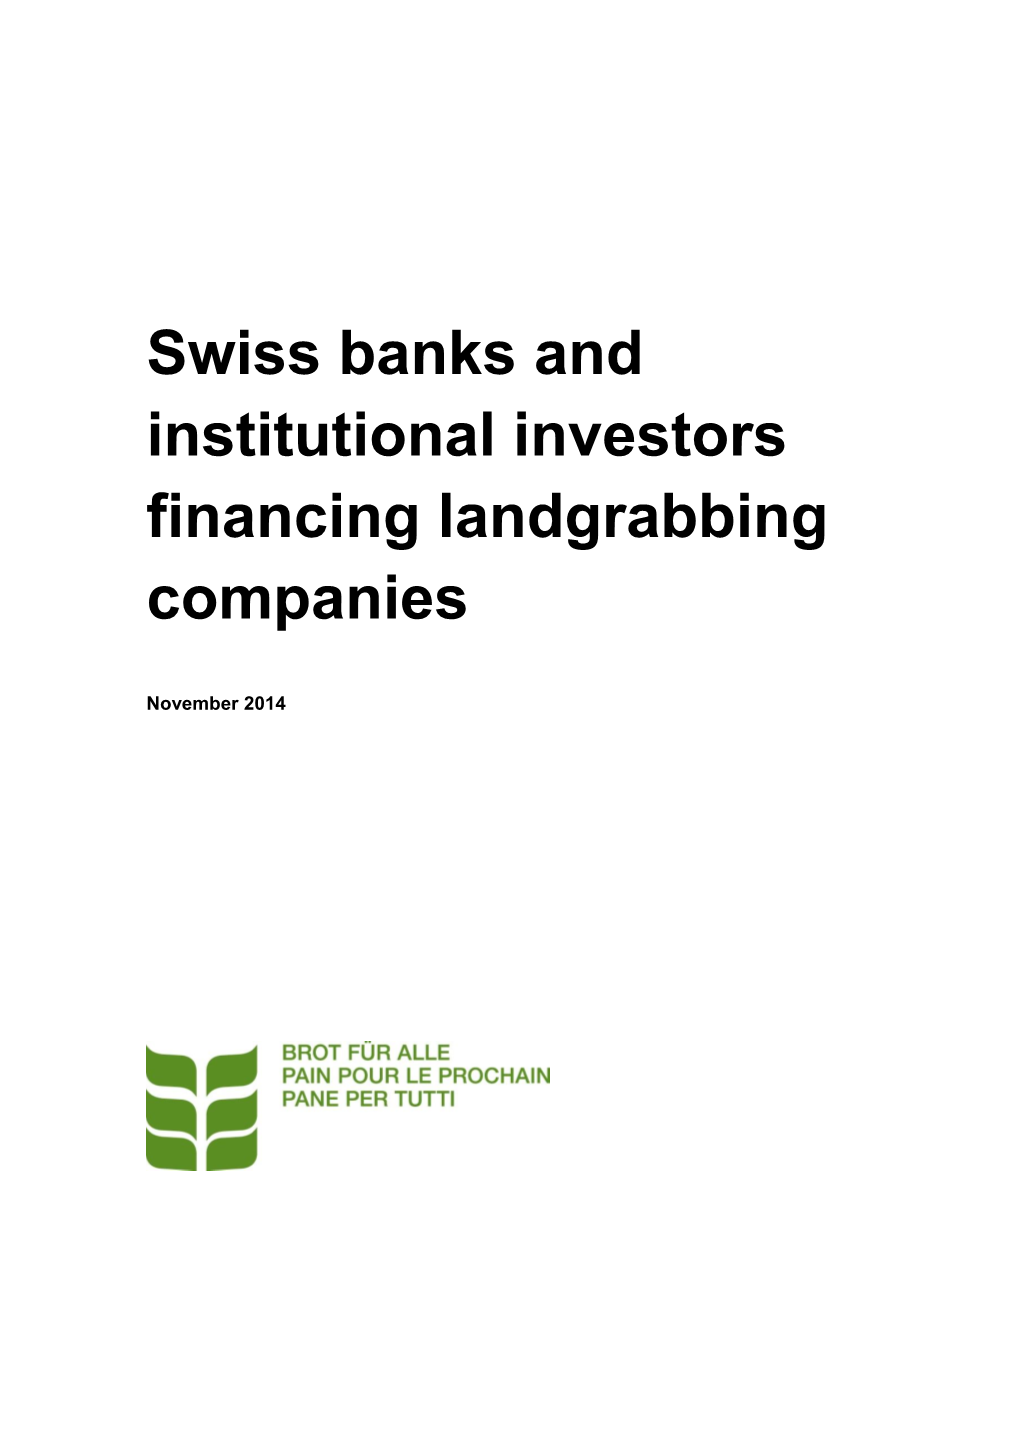 Swiss Banks and Institutional Investors Financing Landgrabbing Companies